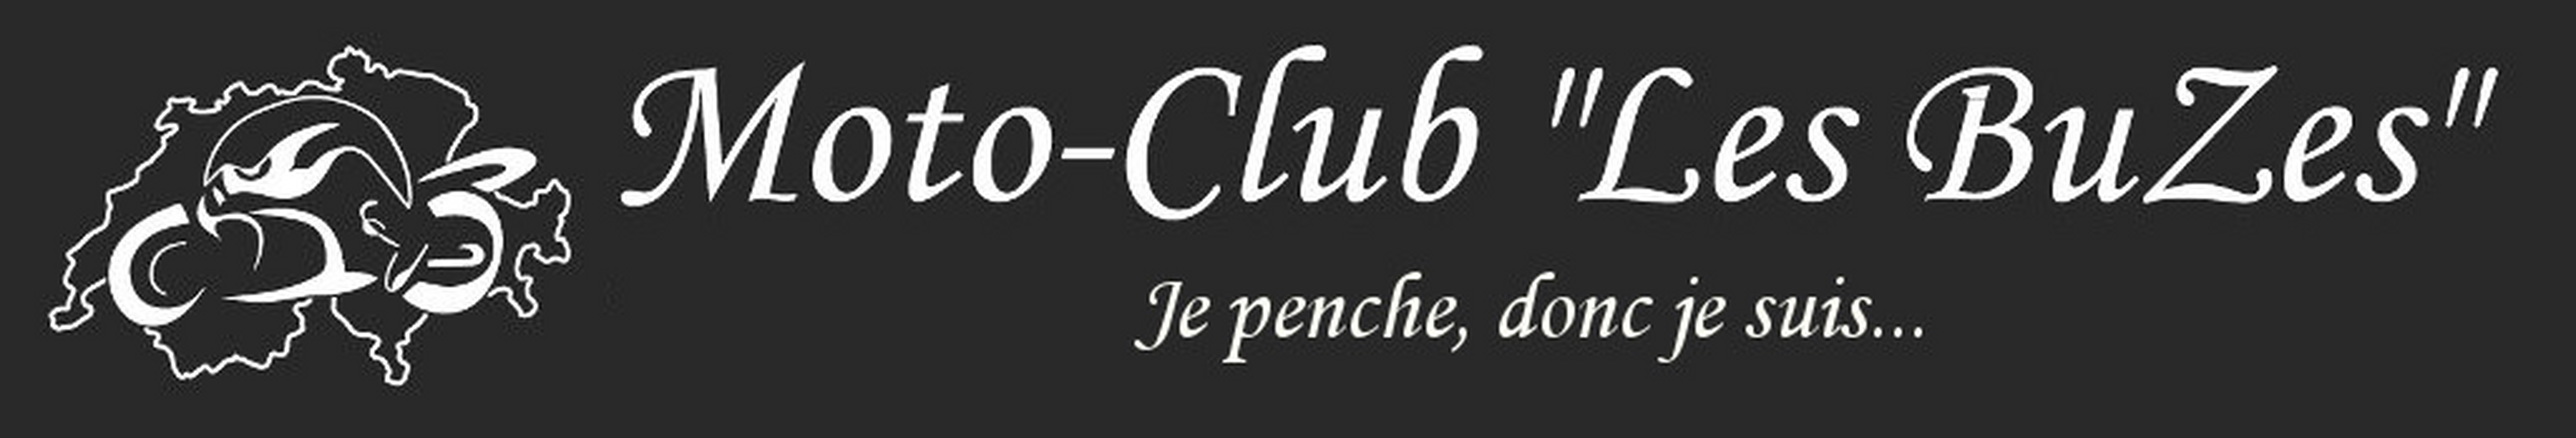 Logo_Moto-Club_Les-BuZes_long_banniere_new_site.jpg